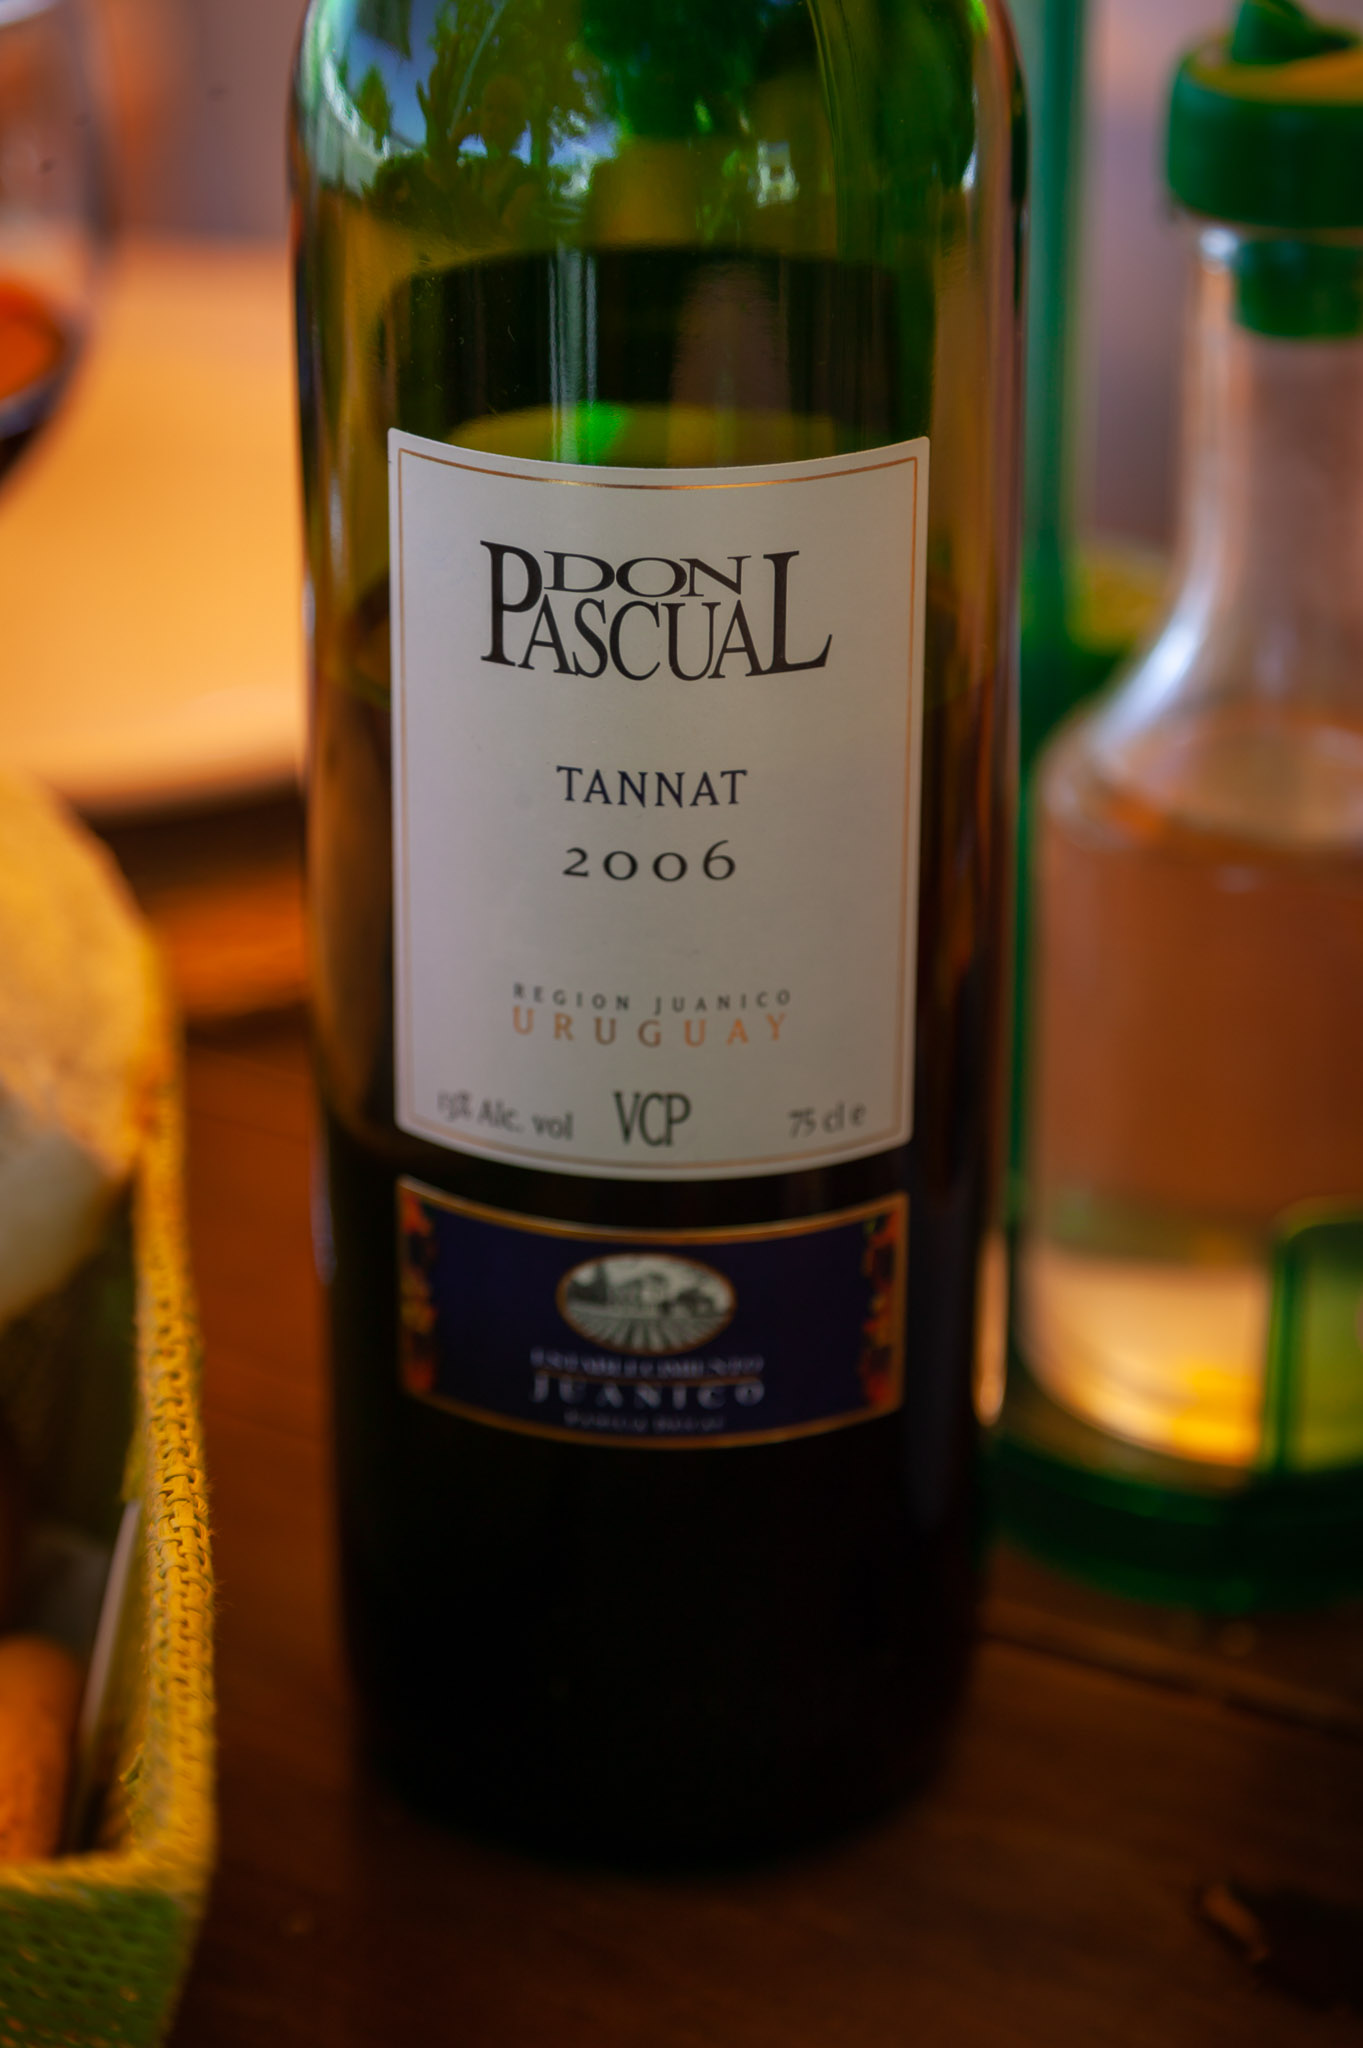 Uruguay wine from Tannat grape ... it was OK